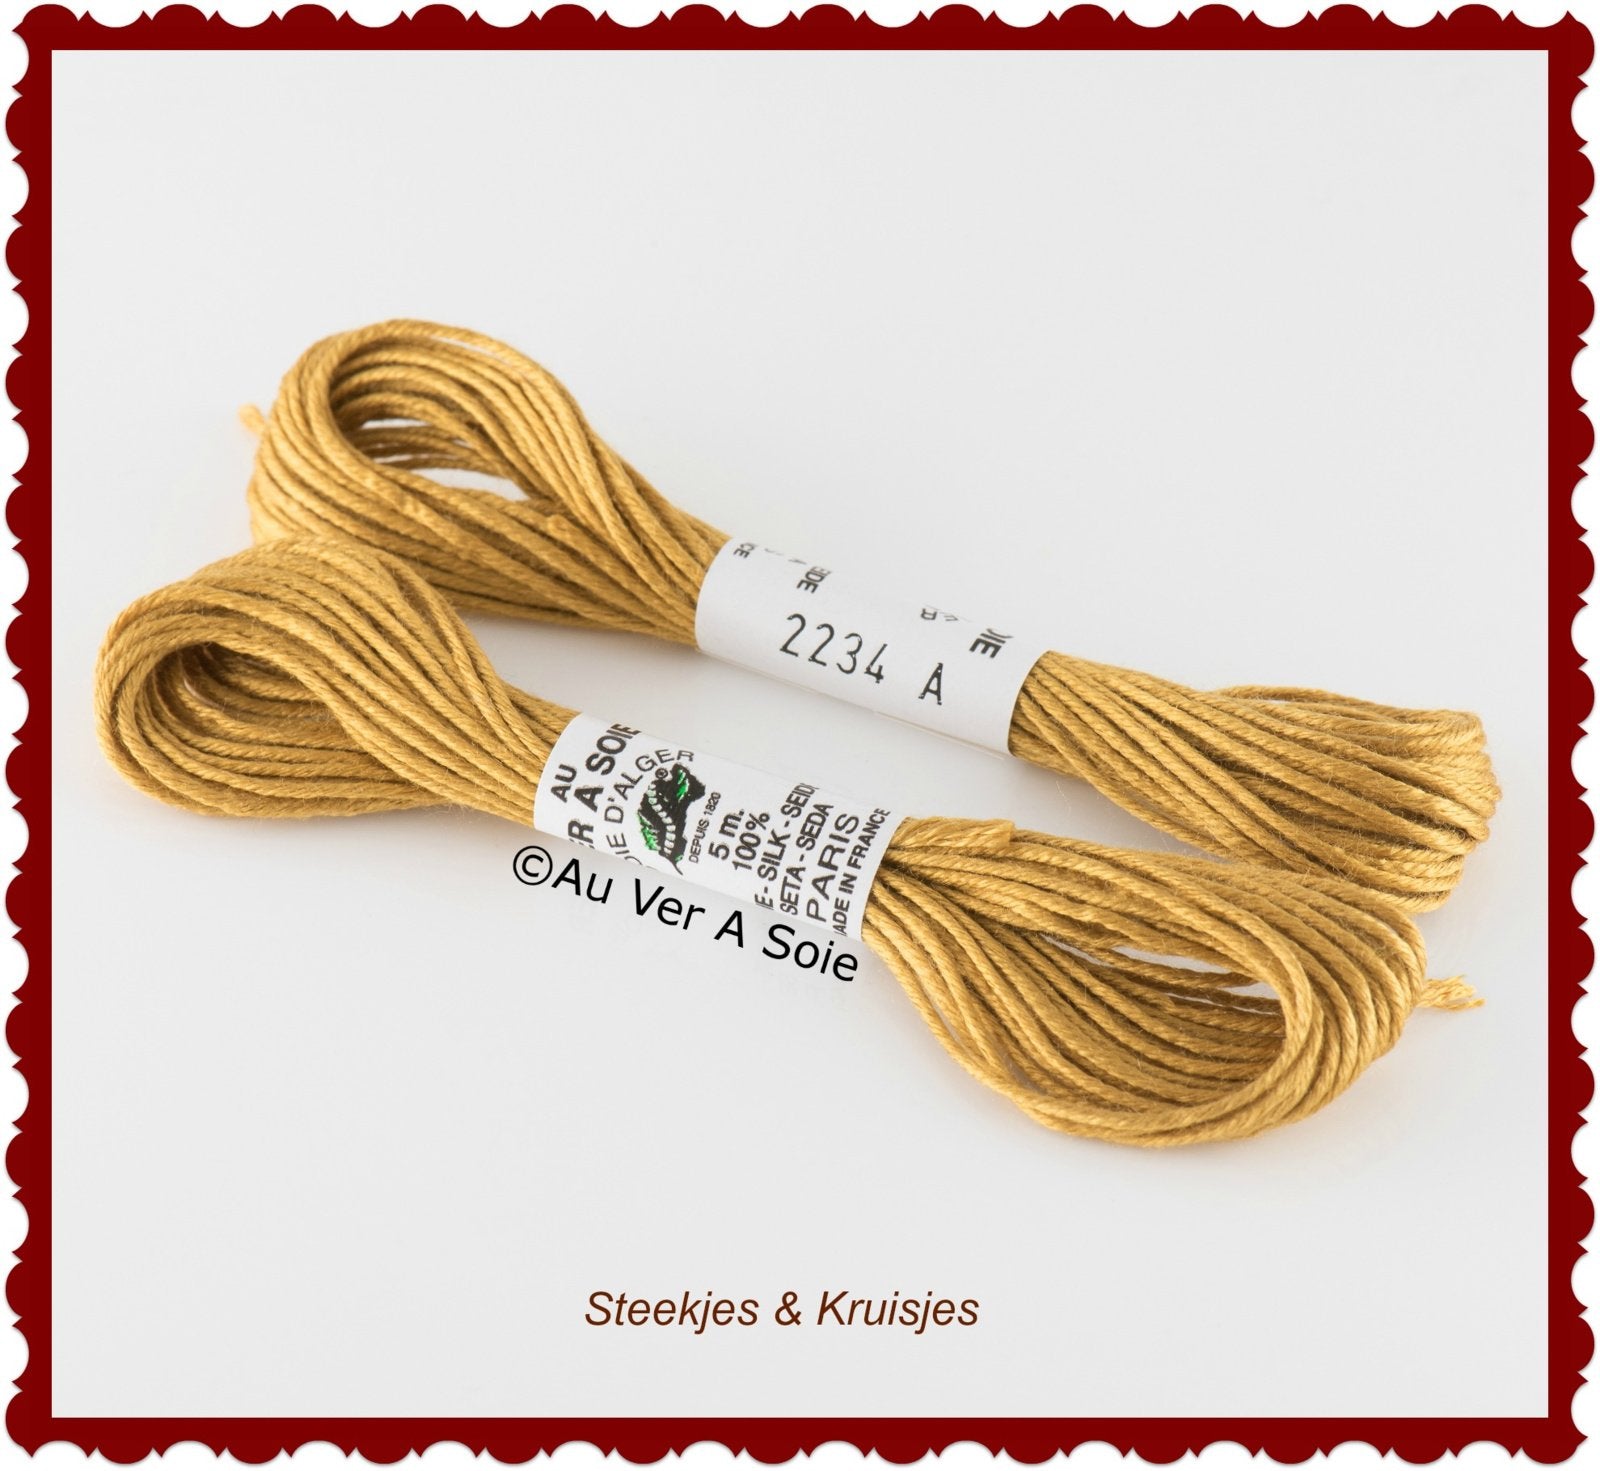 Au ver ie "soie d'alger" silk yarn color no. 2234